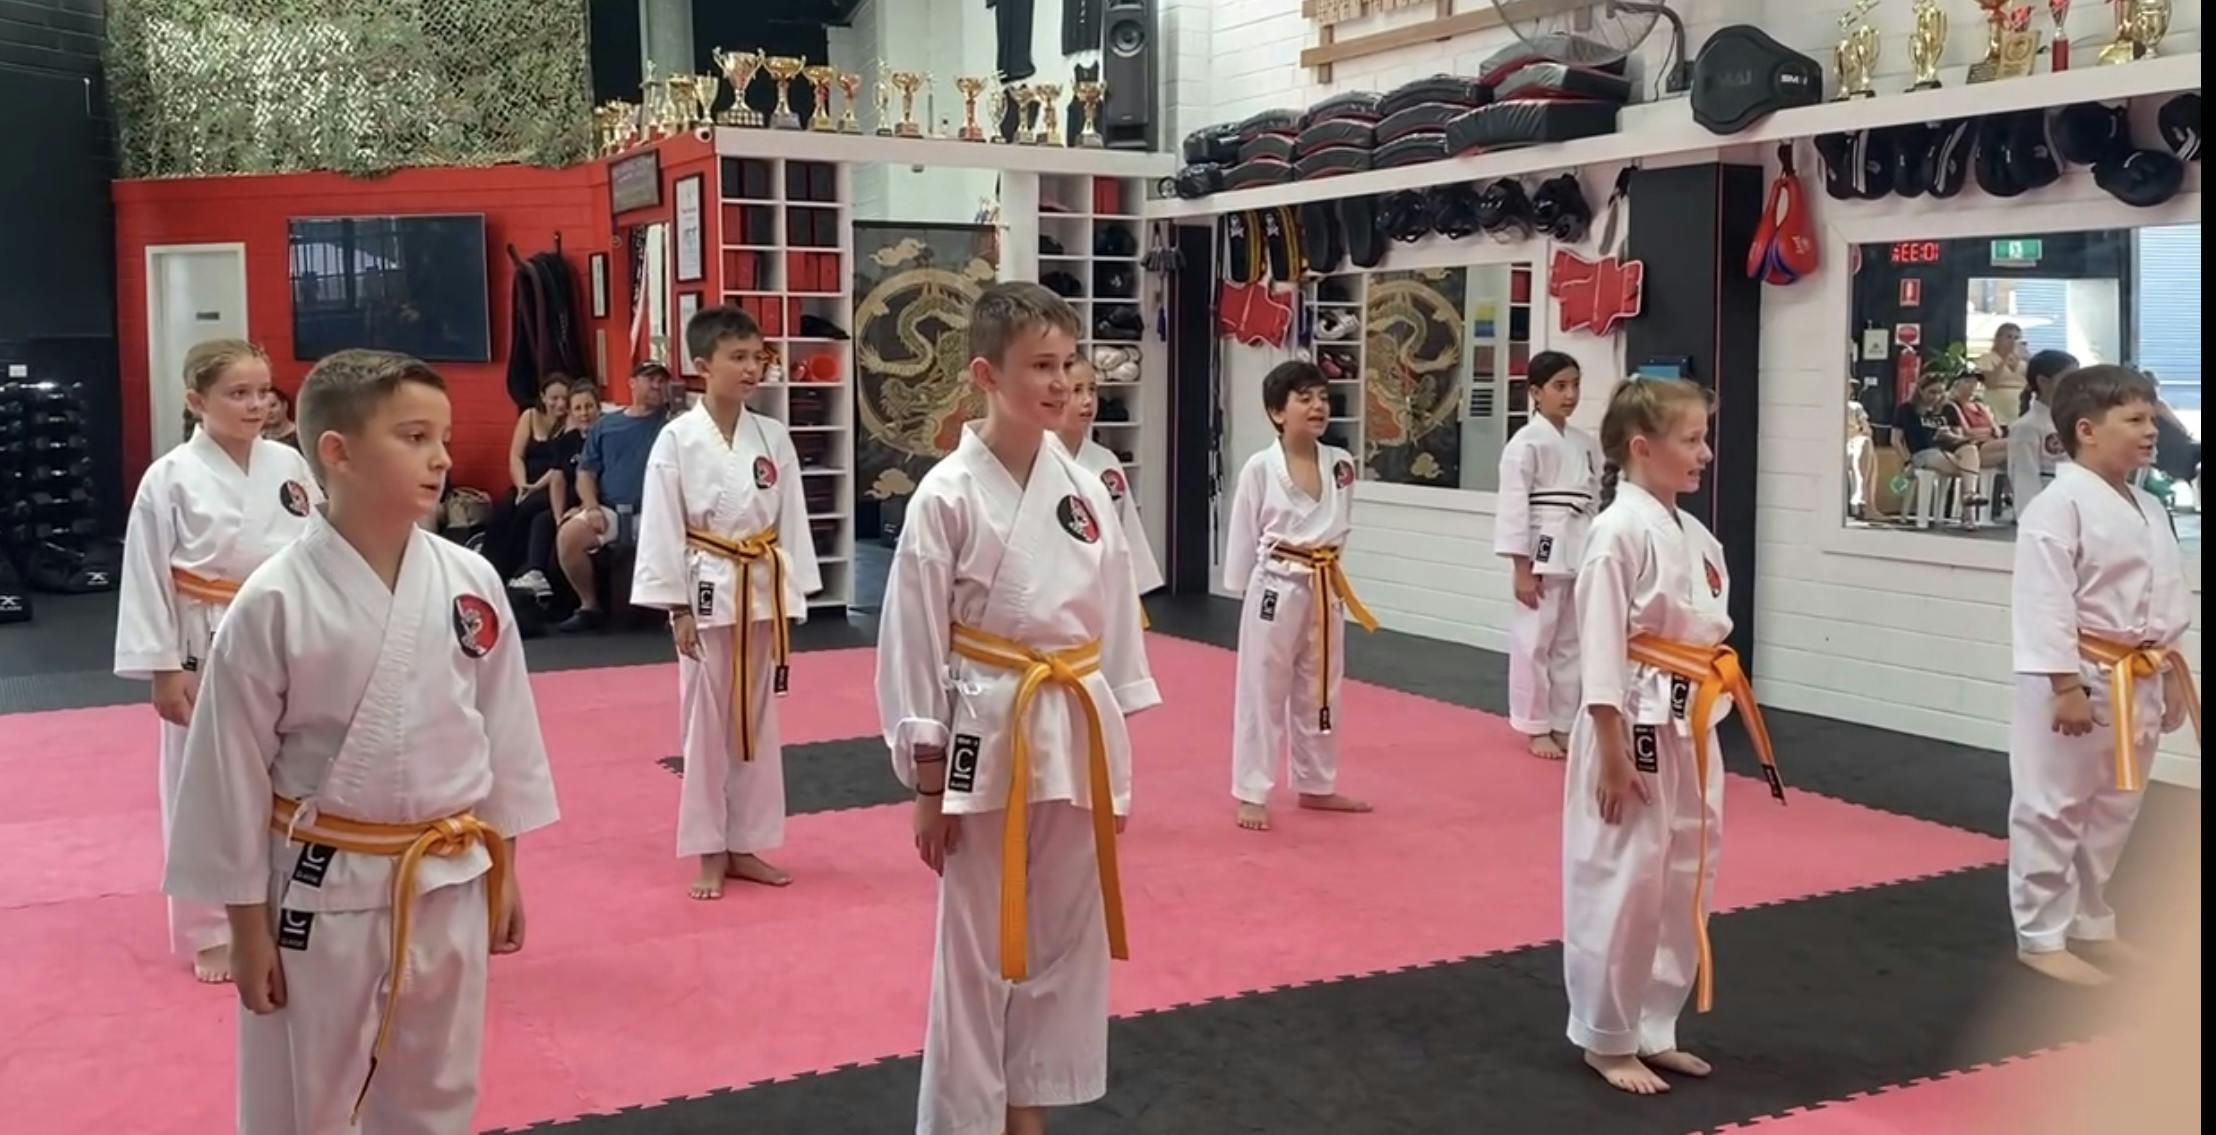 Karate Academy Sydney